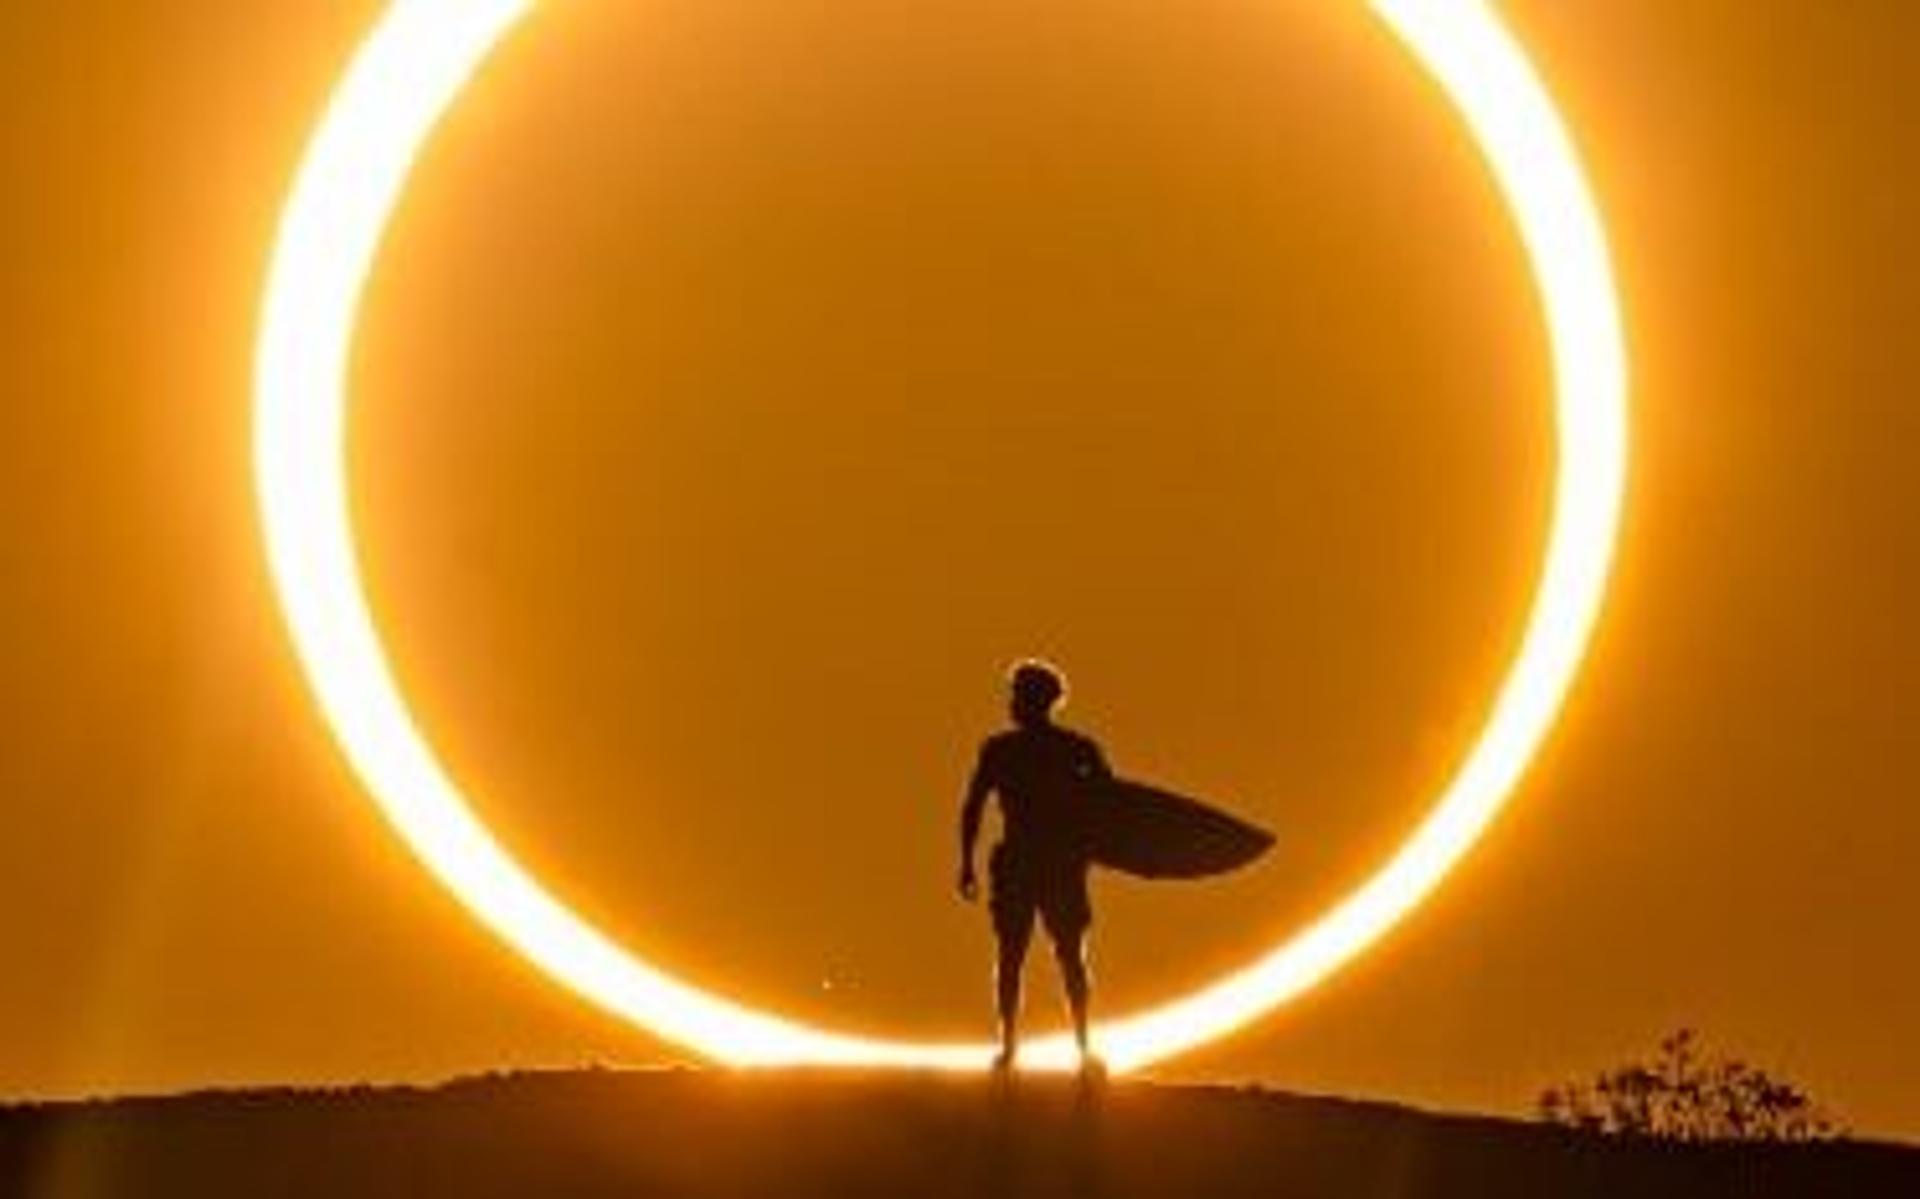 eclipse-aspect-ratio-512-320